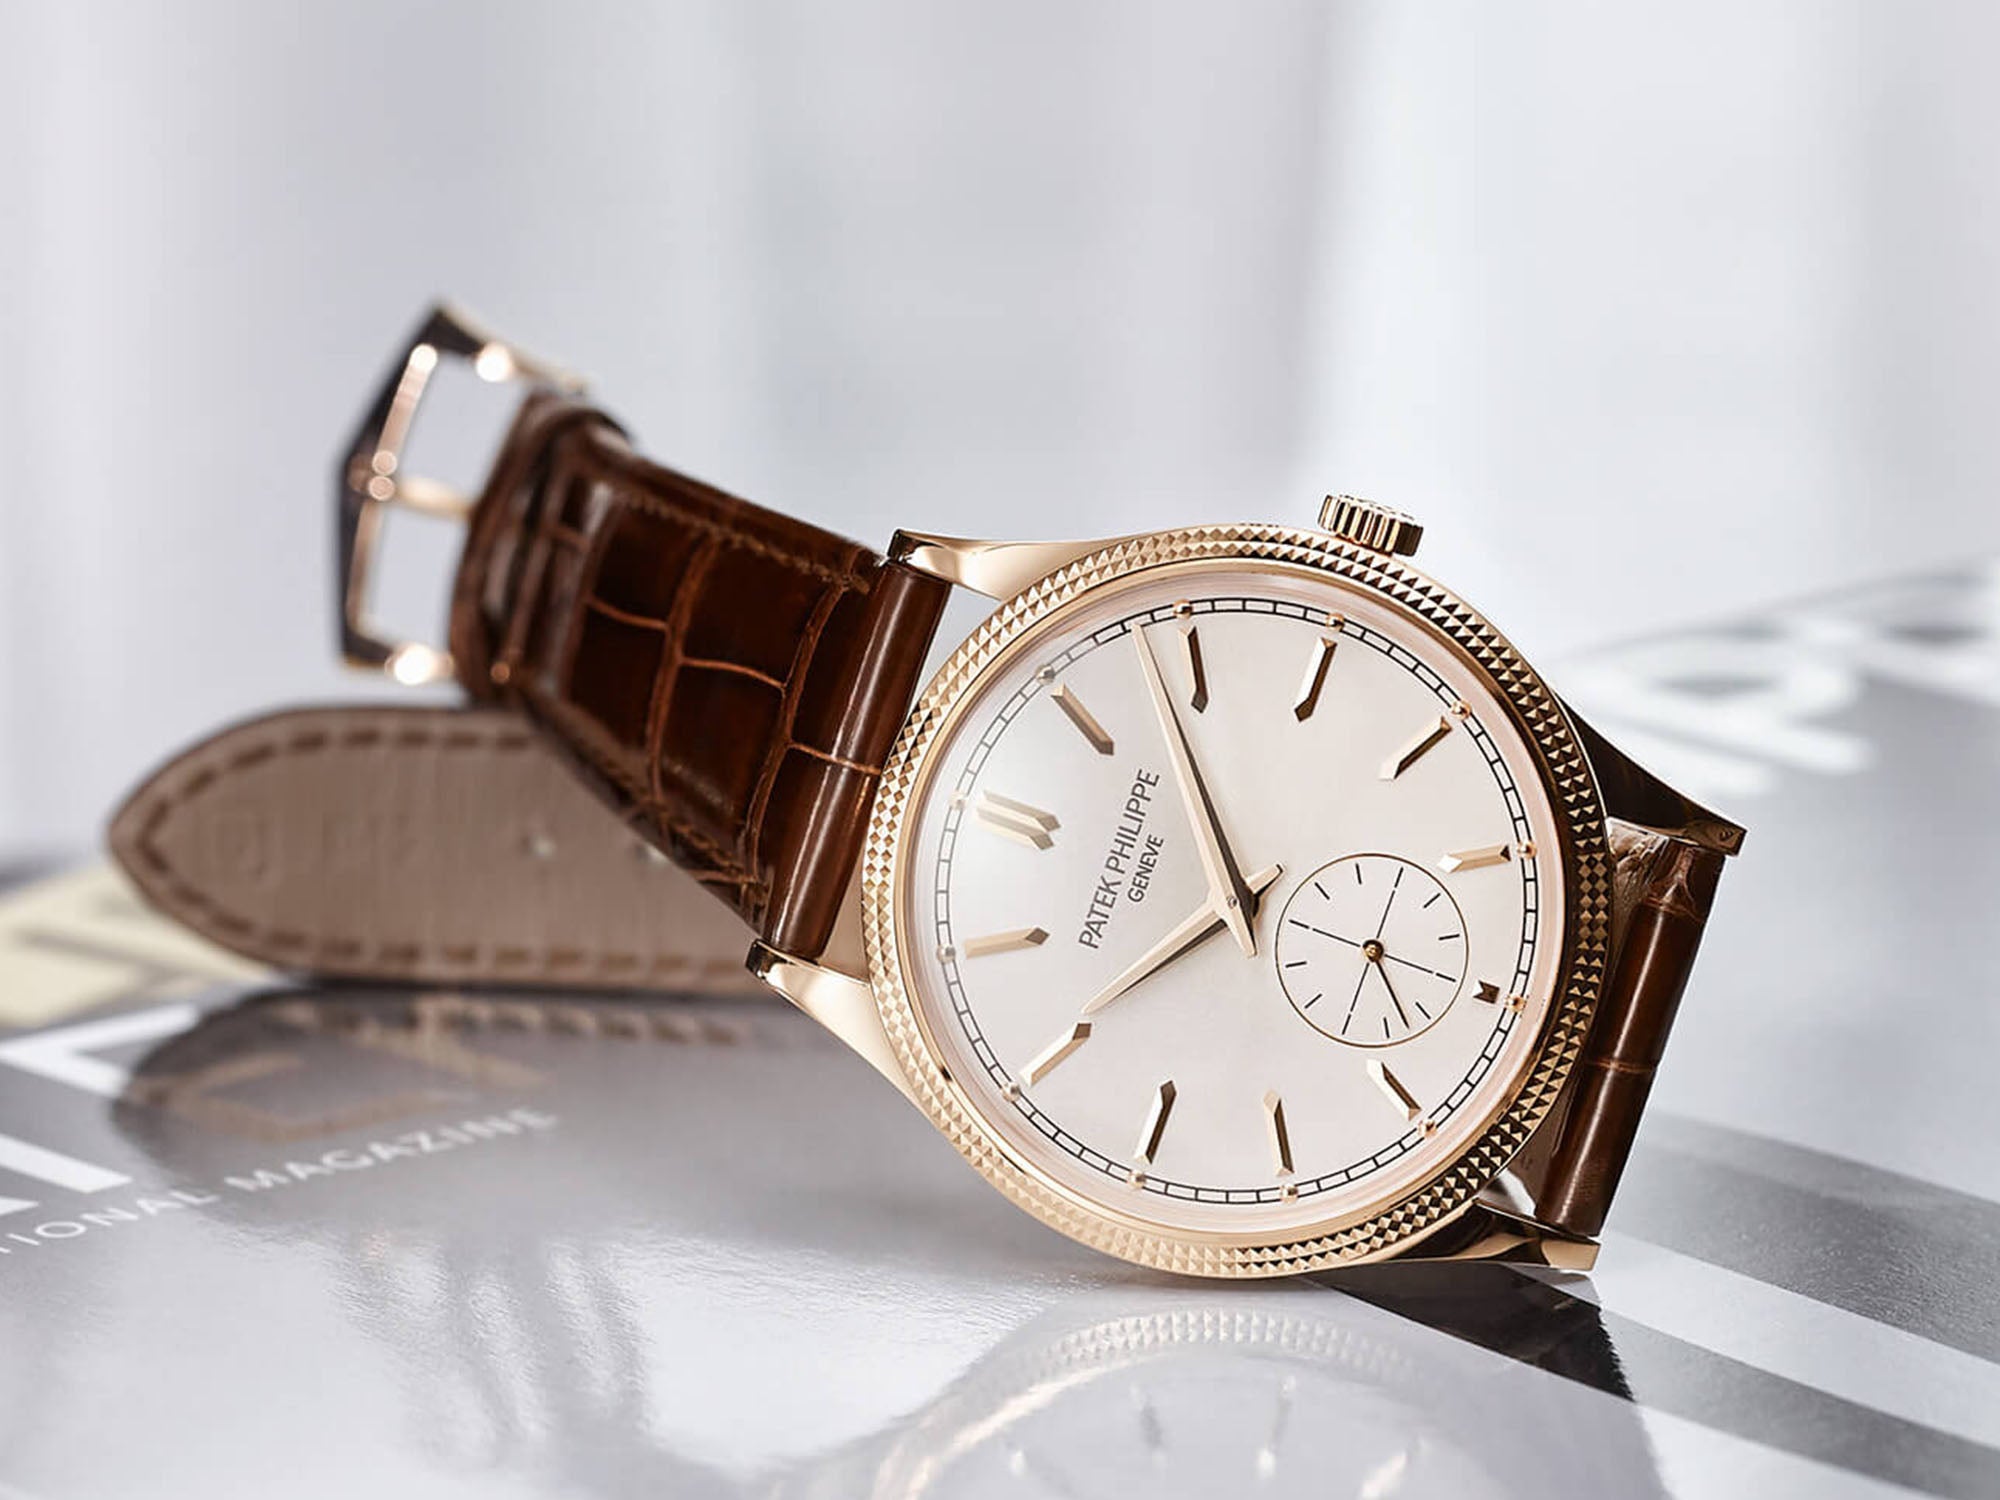 Patek Philippe Official Site  Luxury Watches for Men & Ladies